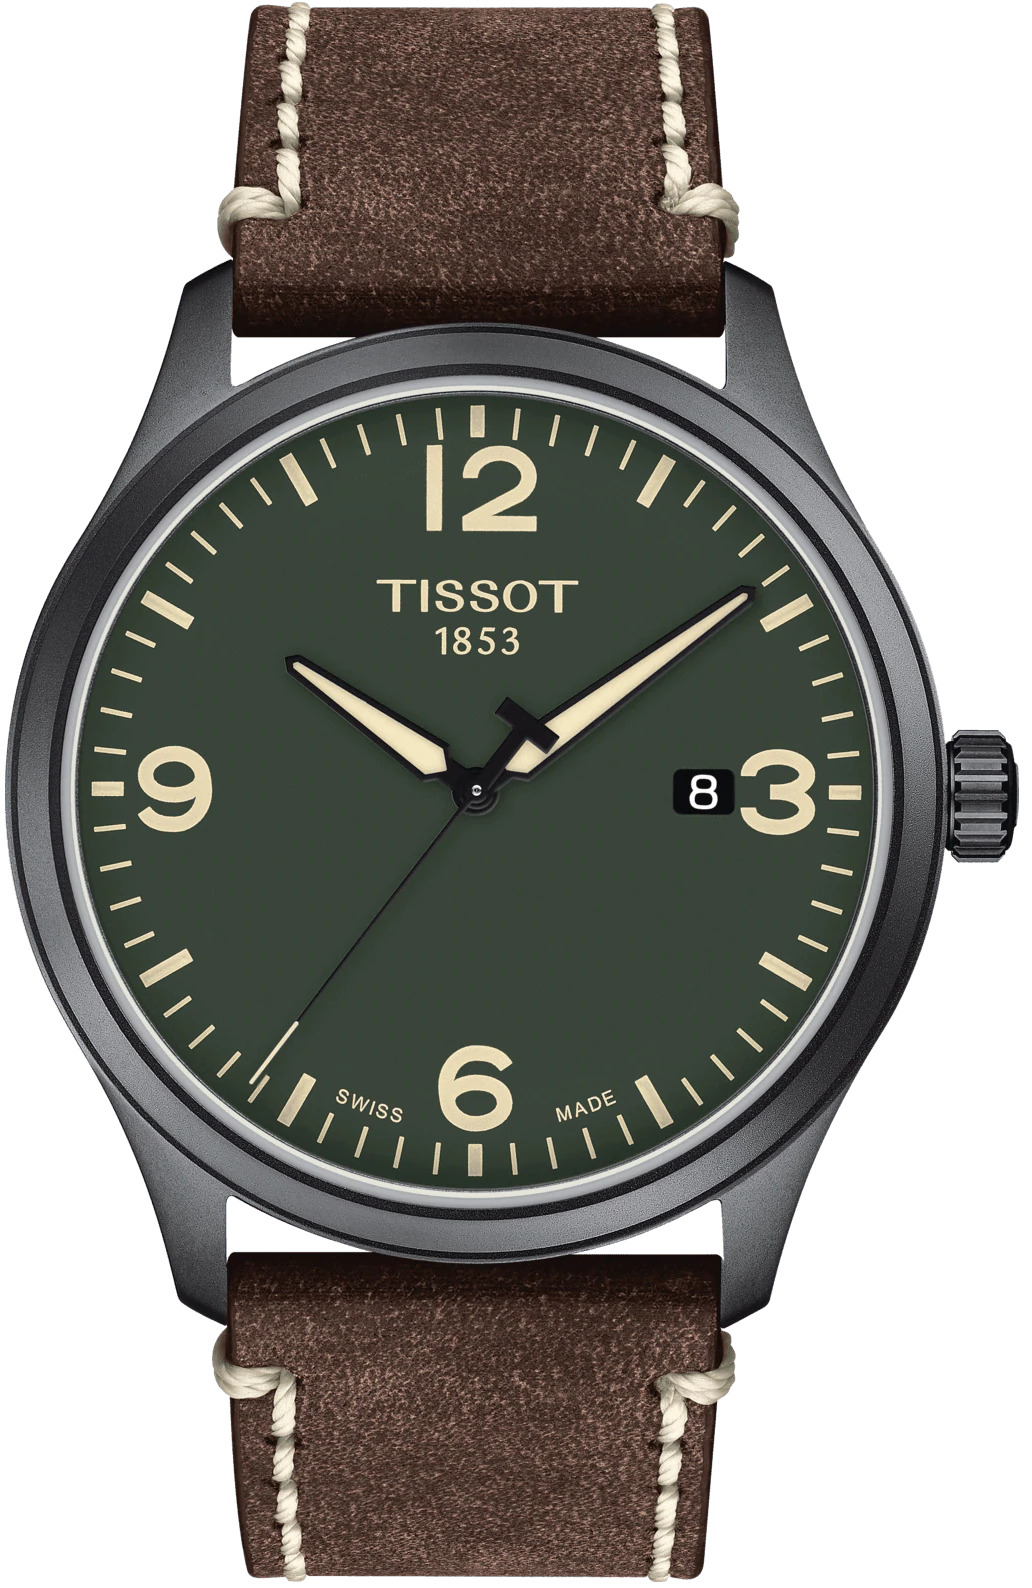 Đồng hồ nam Tissot Gent Xl T116.410.36.097.00